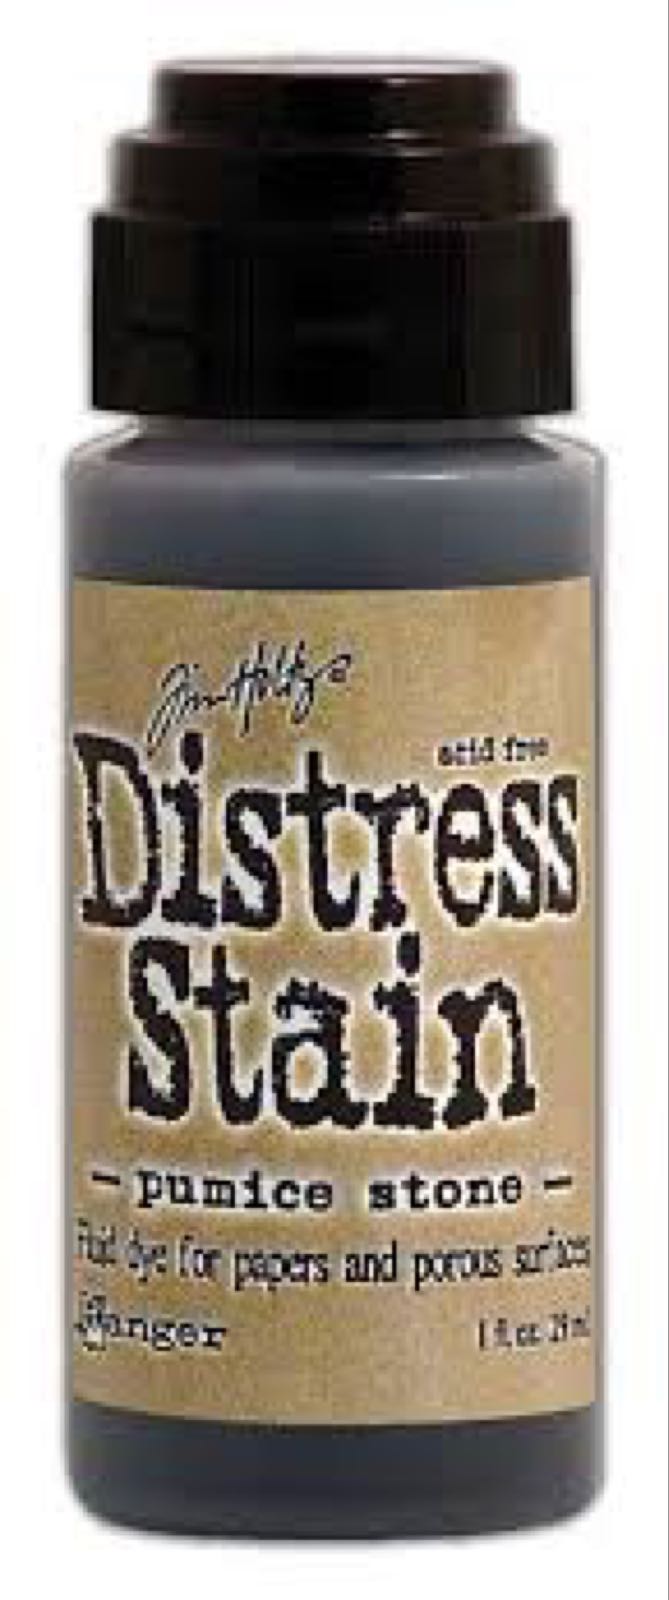 Distress stain  Pumice stone